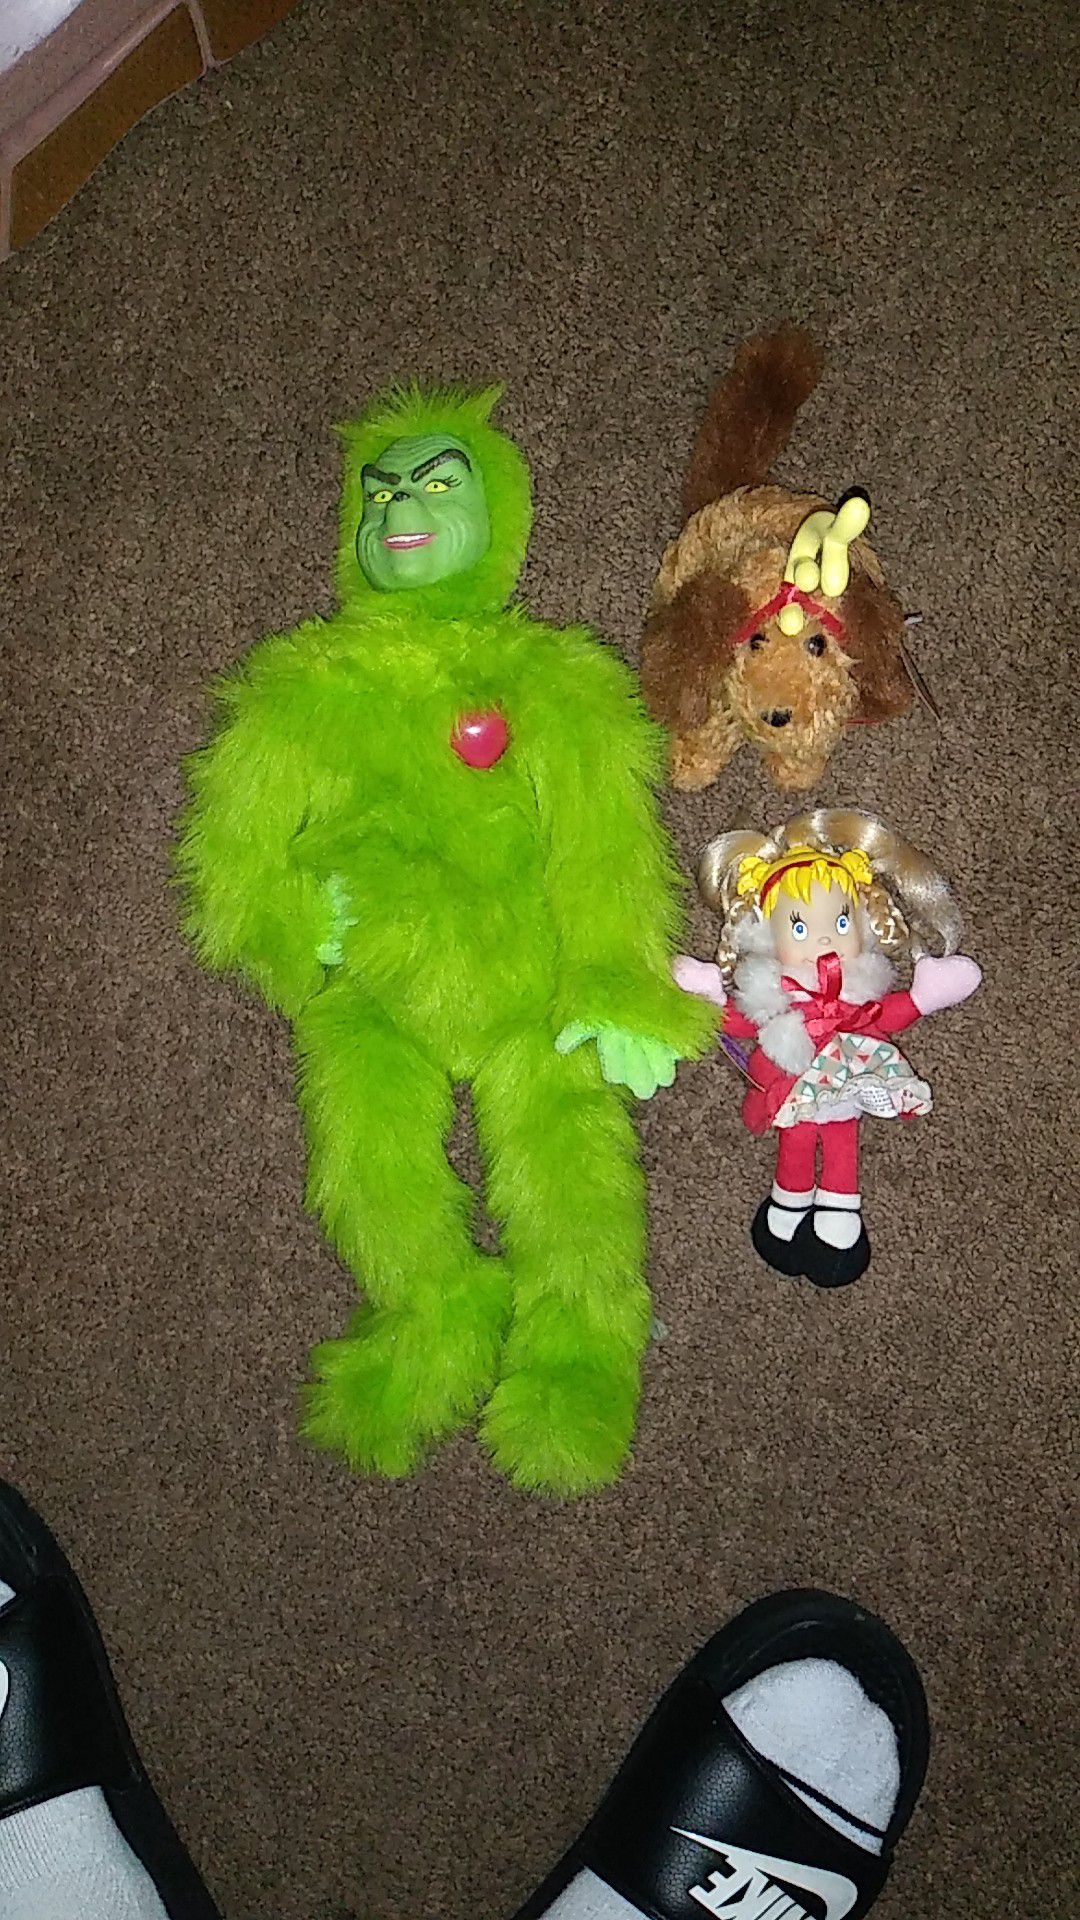 Grinch stuffed animal and Cindy Loo and the dog